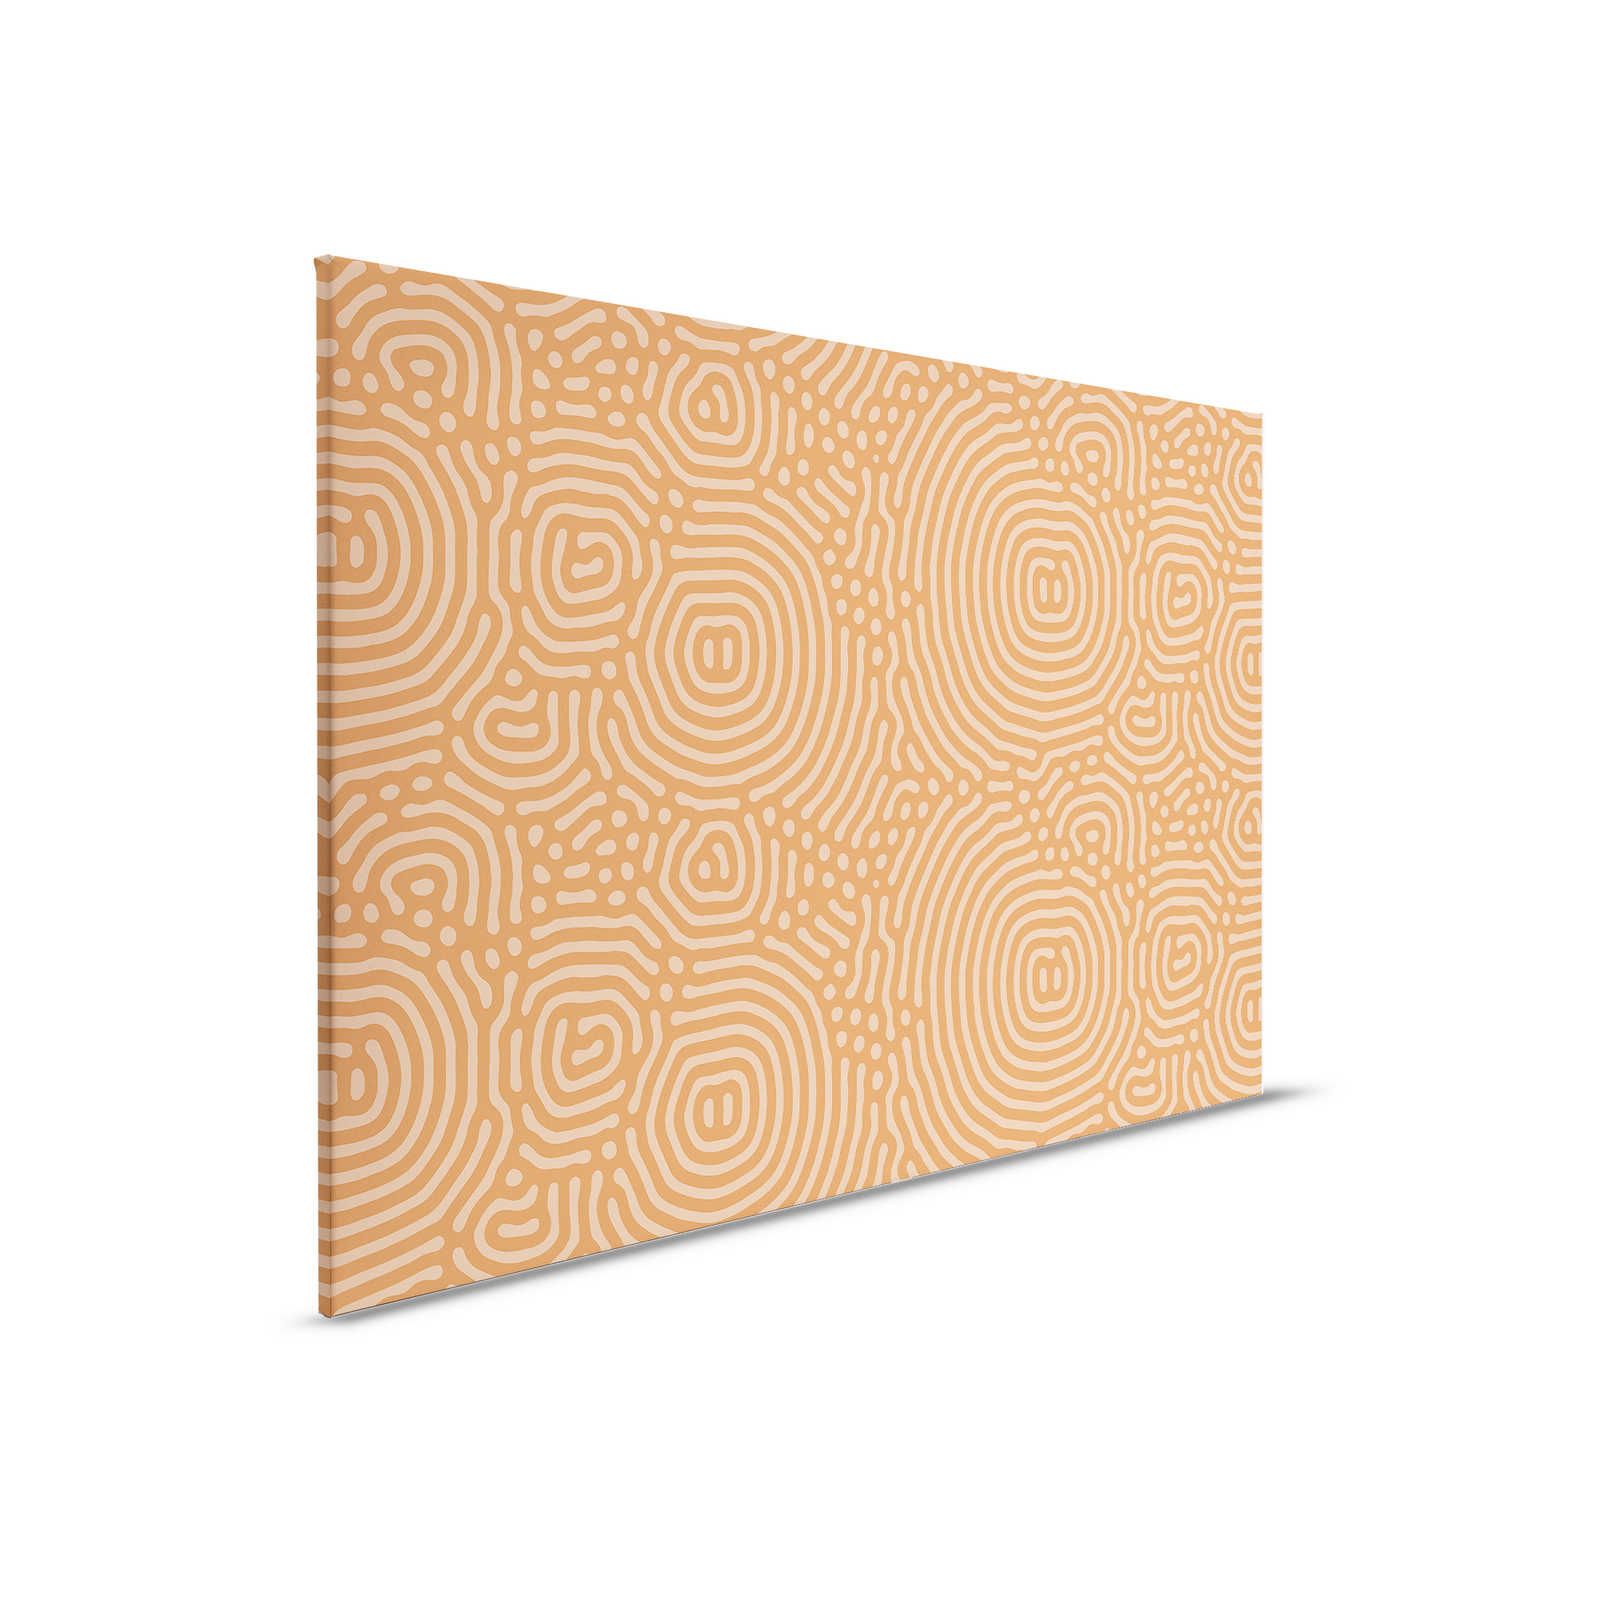         Sahel 2 - Oranges Leinwandbild Labyrinth Muster Terrakotta – 0,90 m x 0,60 m
    